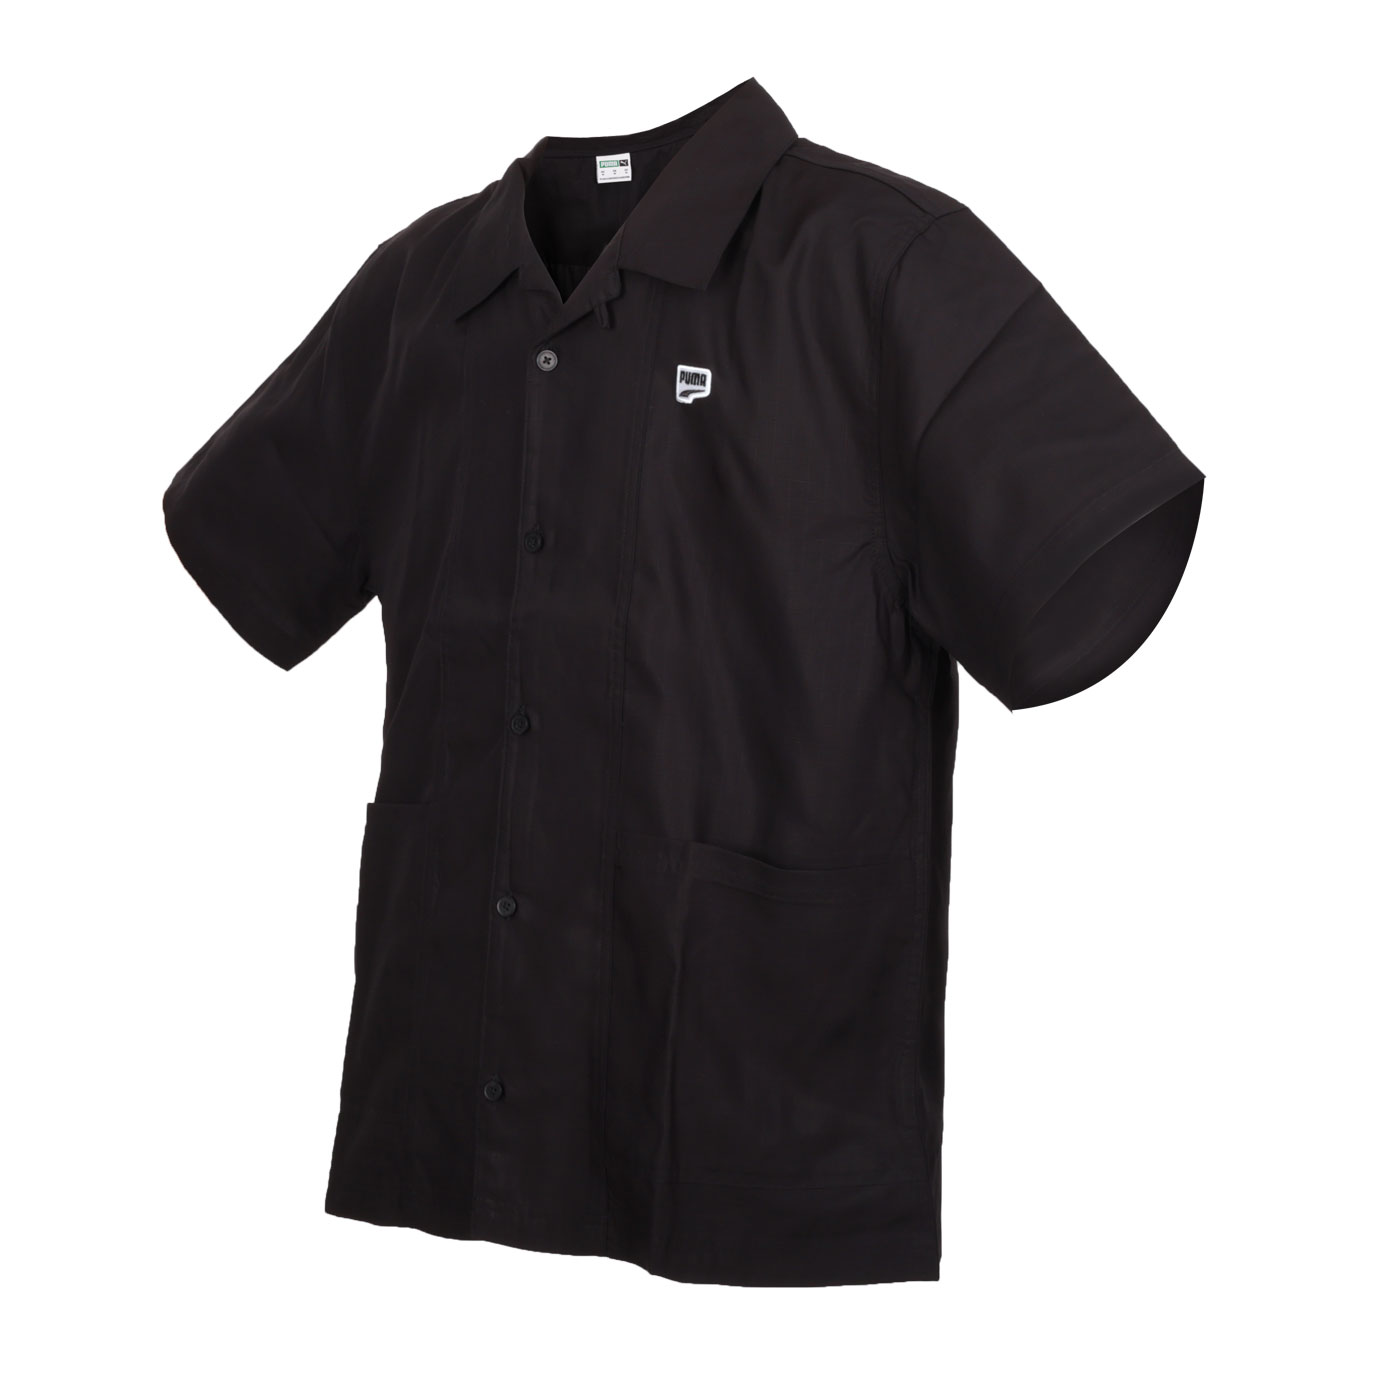 PUMA 男款流行系列Downtown竹纖短袖襯衫  53825501 - 黑白